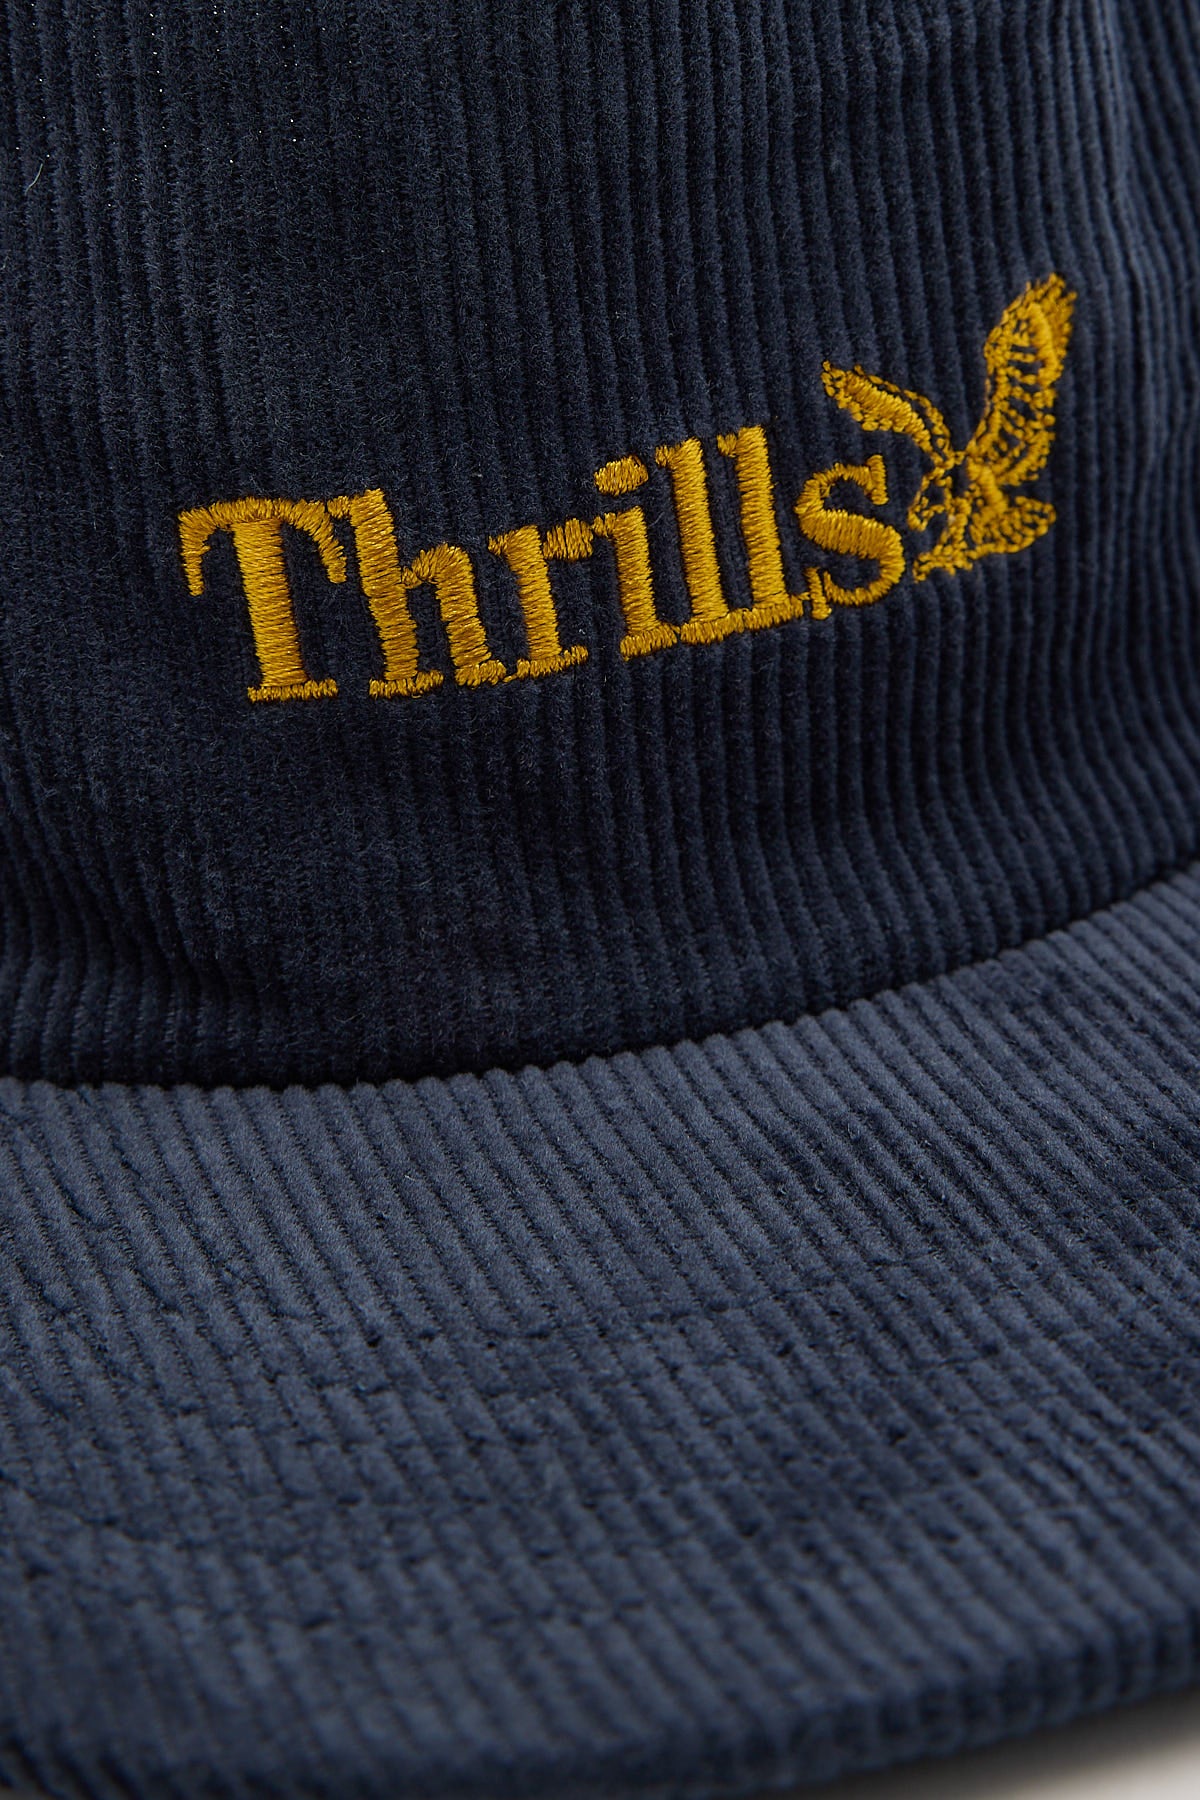 Thrills Thrills Workwear 5 Panel Cap Light Petrol